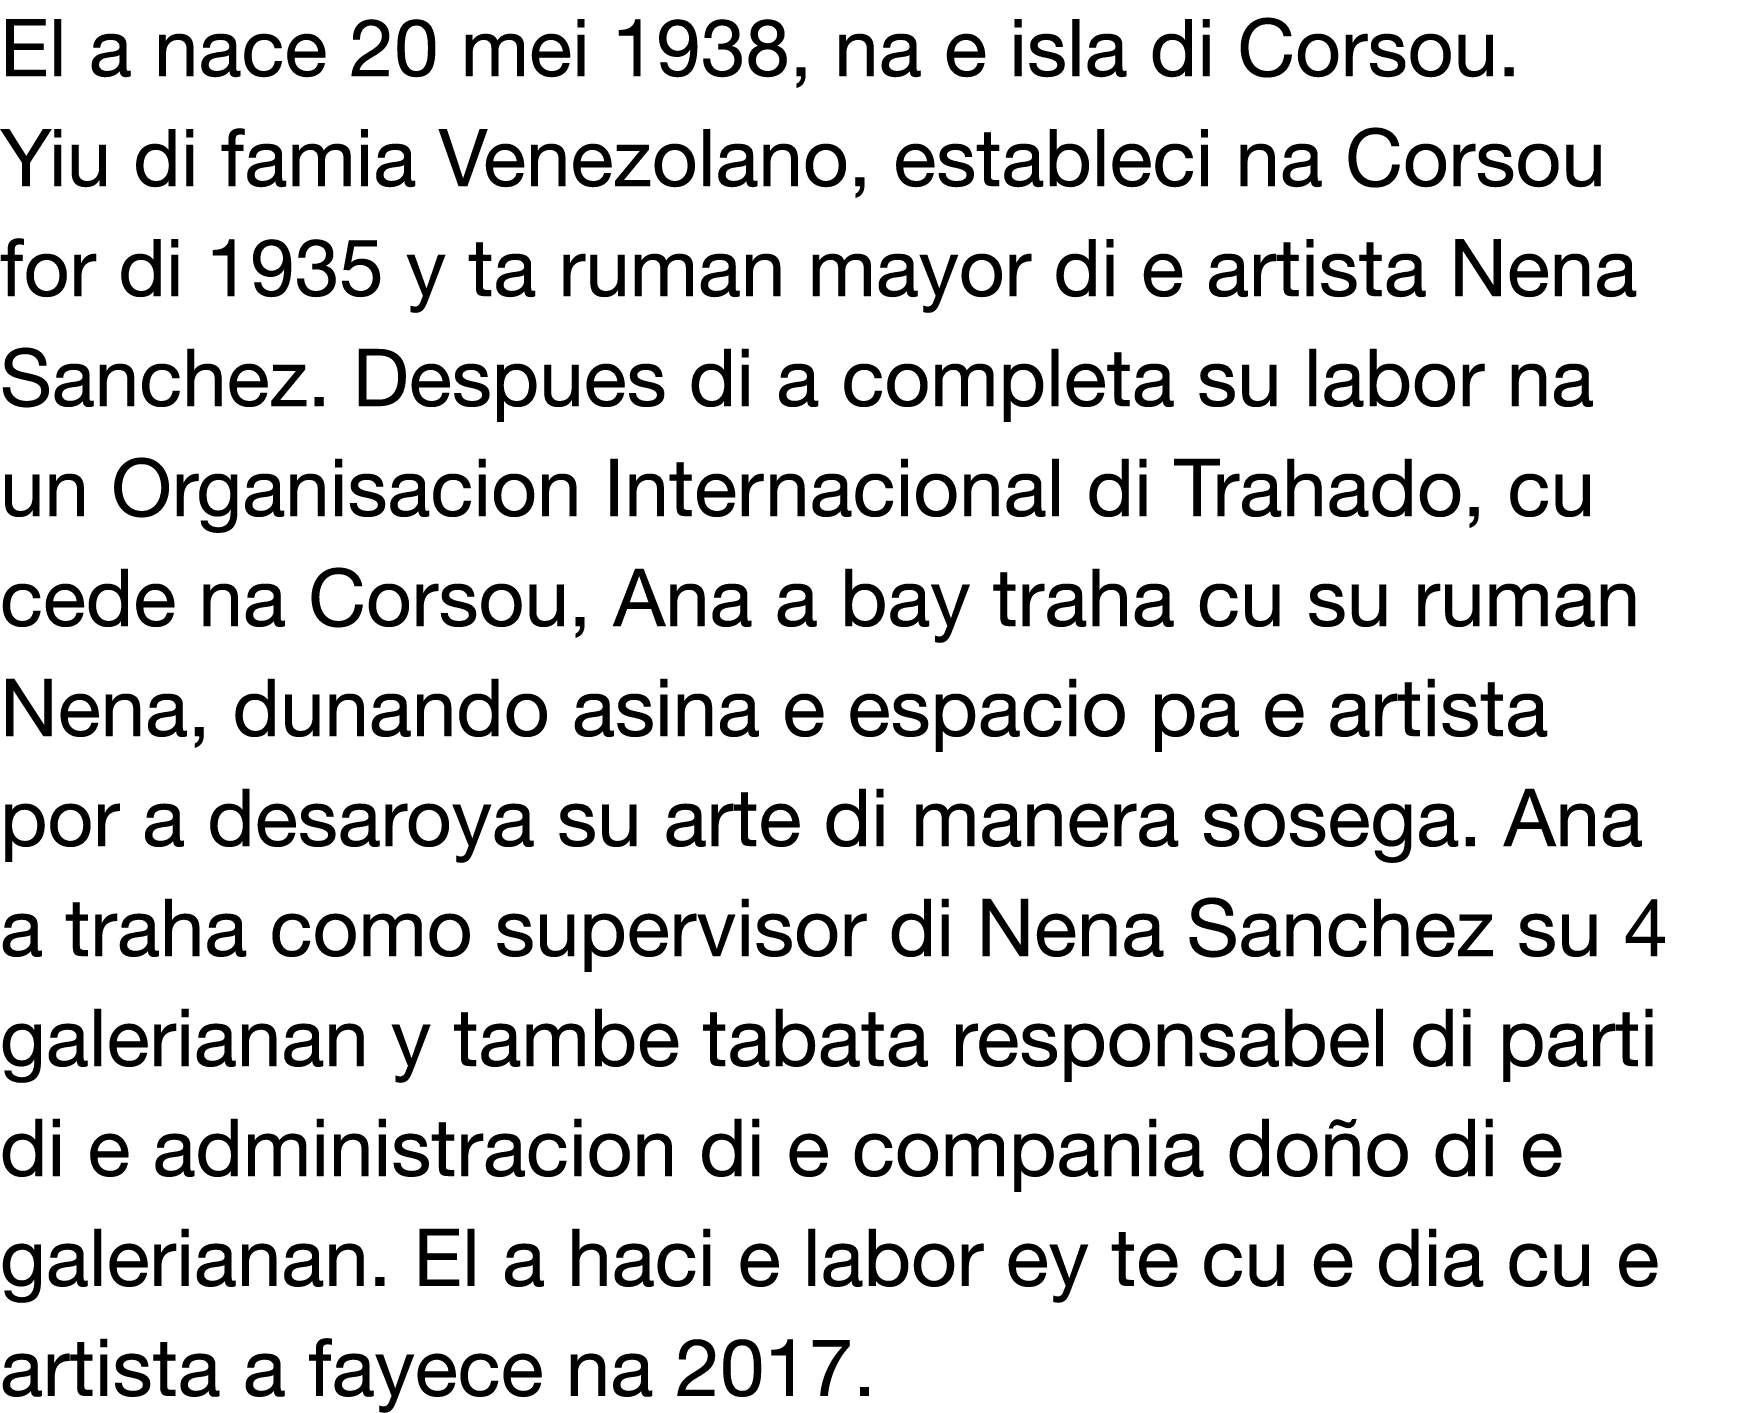 El a nace 20 mei 1938, na e isla di Corsou  Yiu di famia Venezolano, estableci na Corsou for di 1935 y ta ruman mayor   